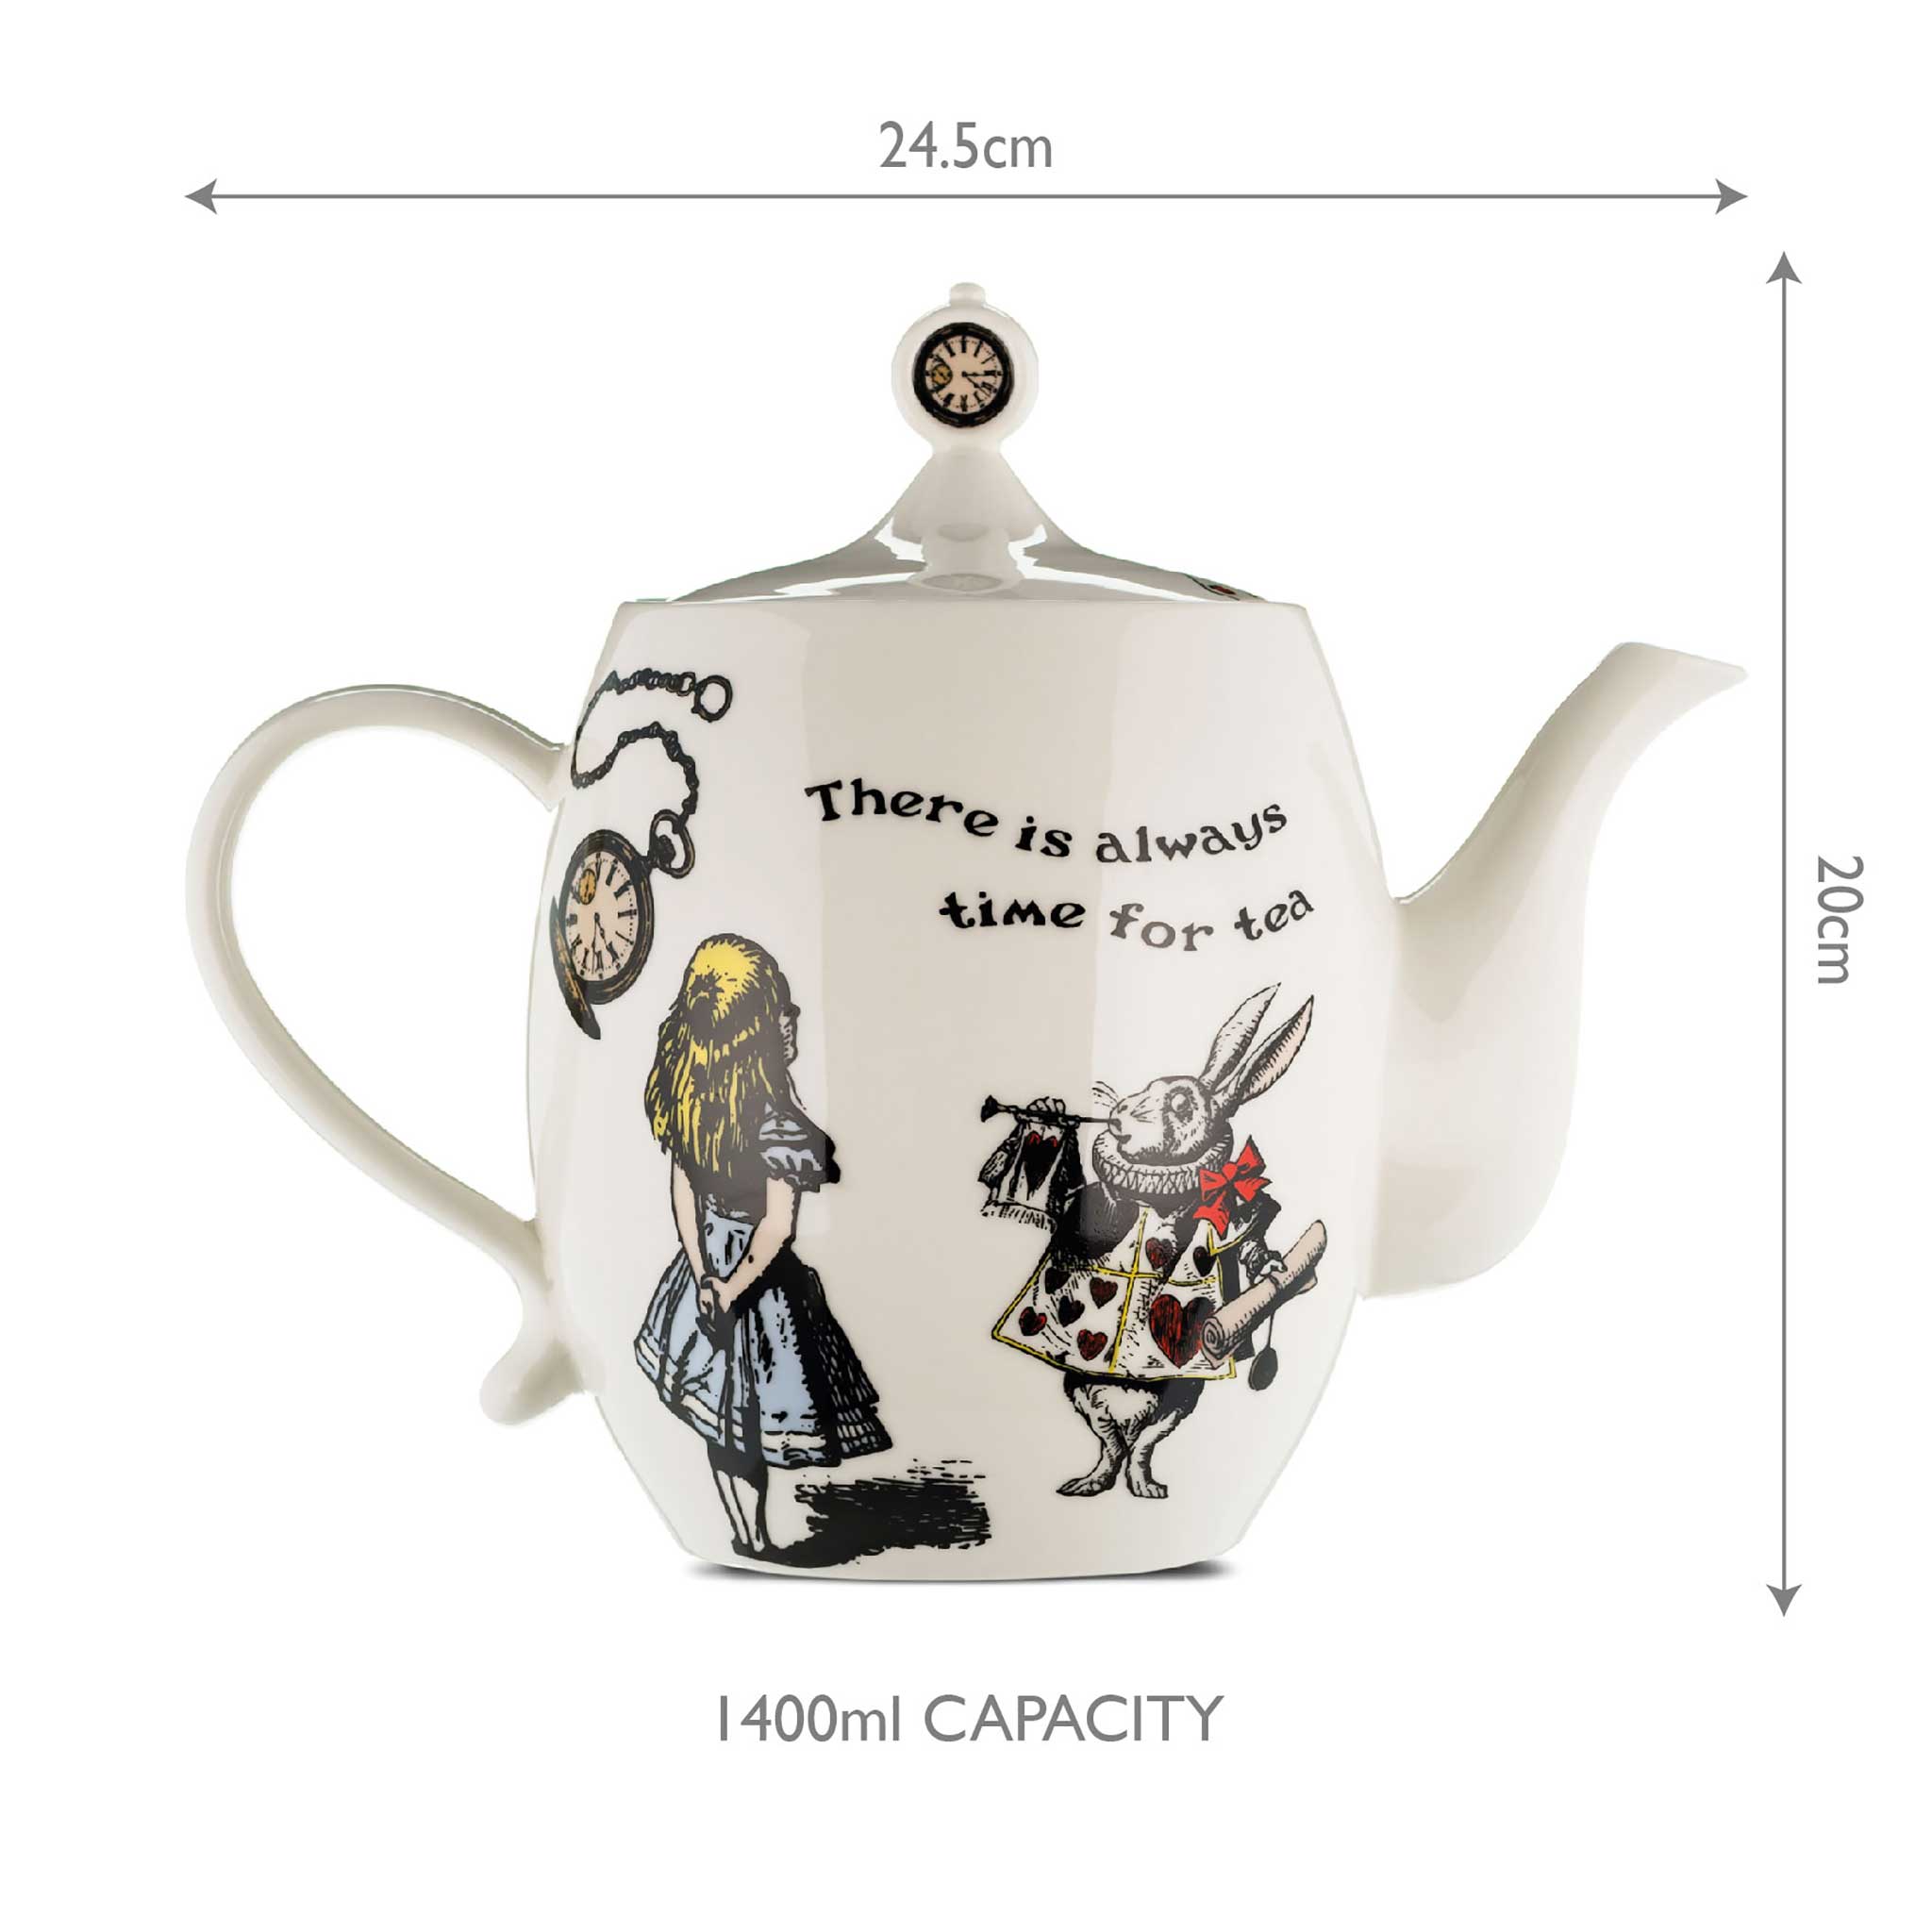 Alice in Wonderland Teapot Dimensions